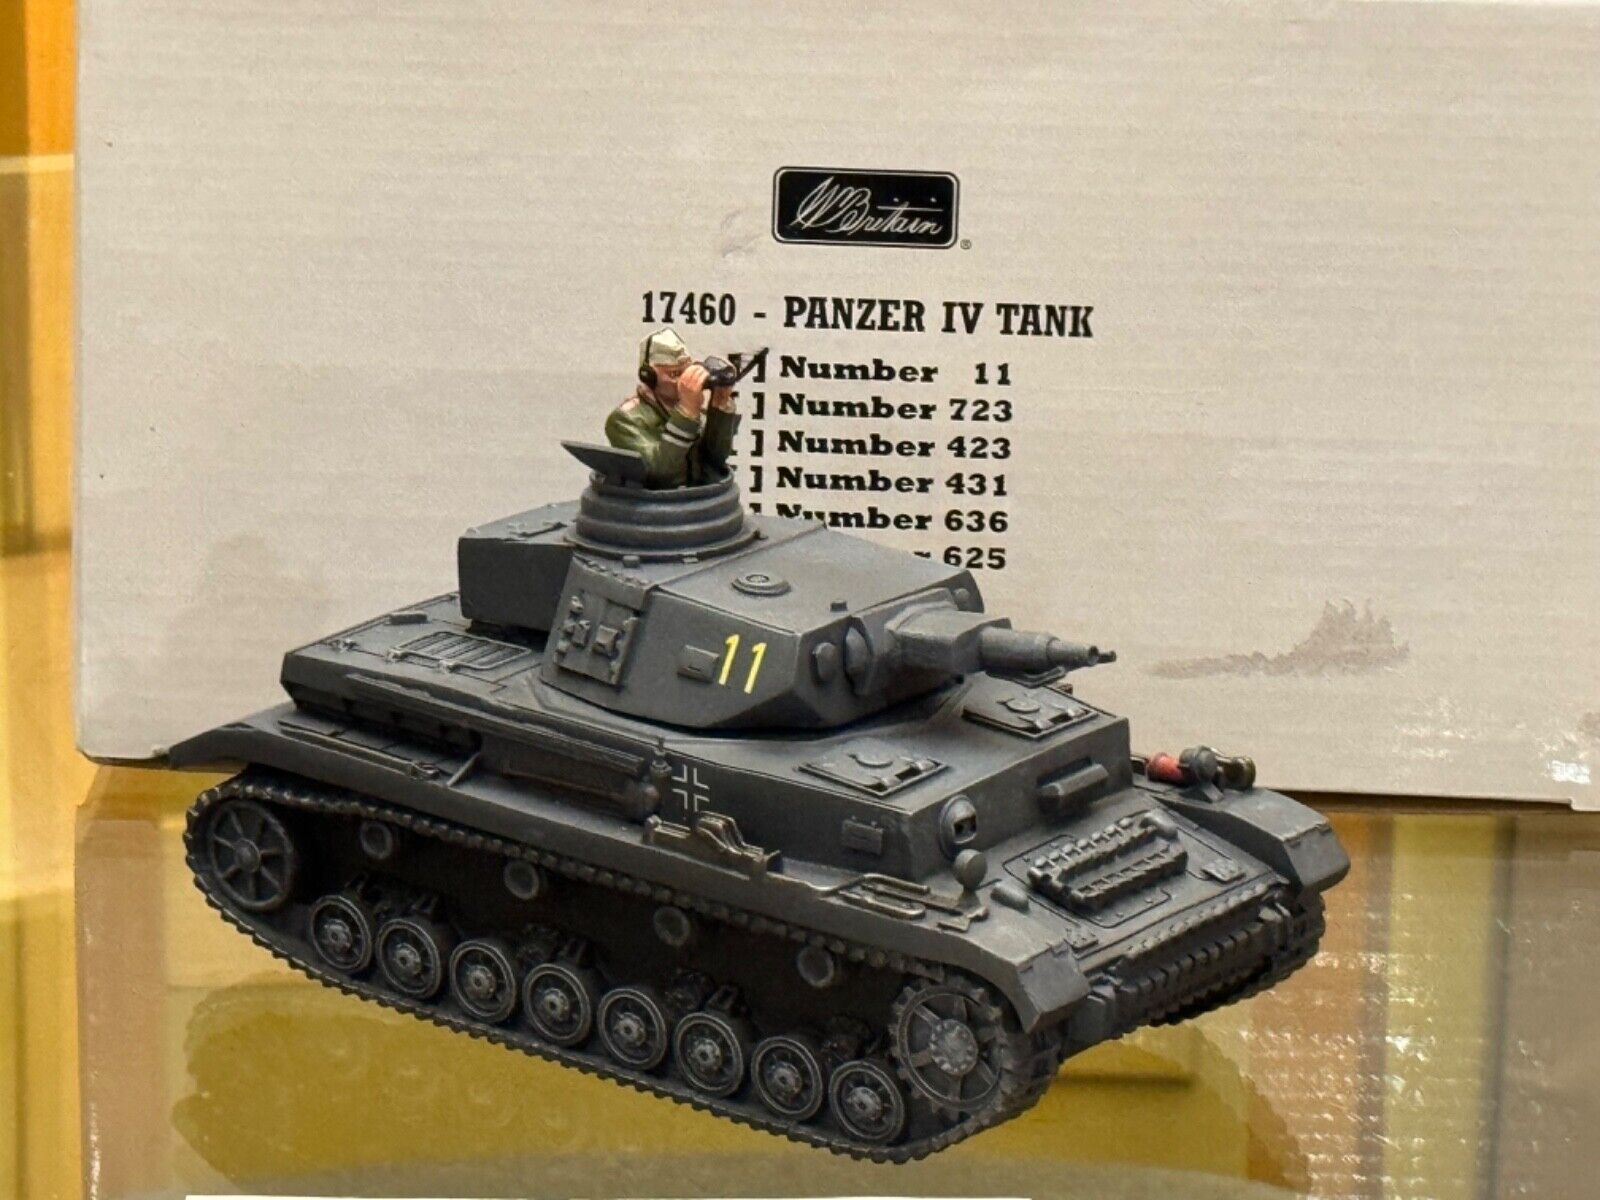 Britain ww2 German Panzer IV Tank 17460 Turret #11 RETIRED,WITH COMMANDER RARE